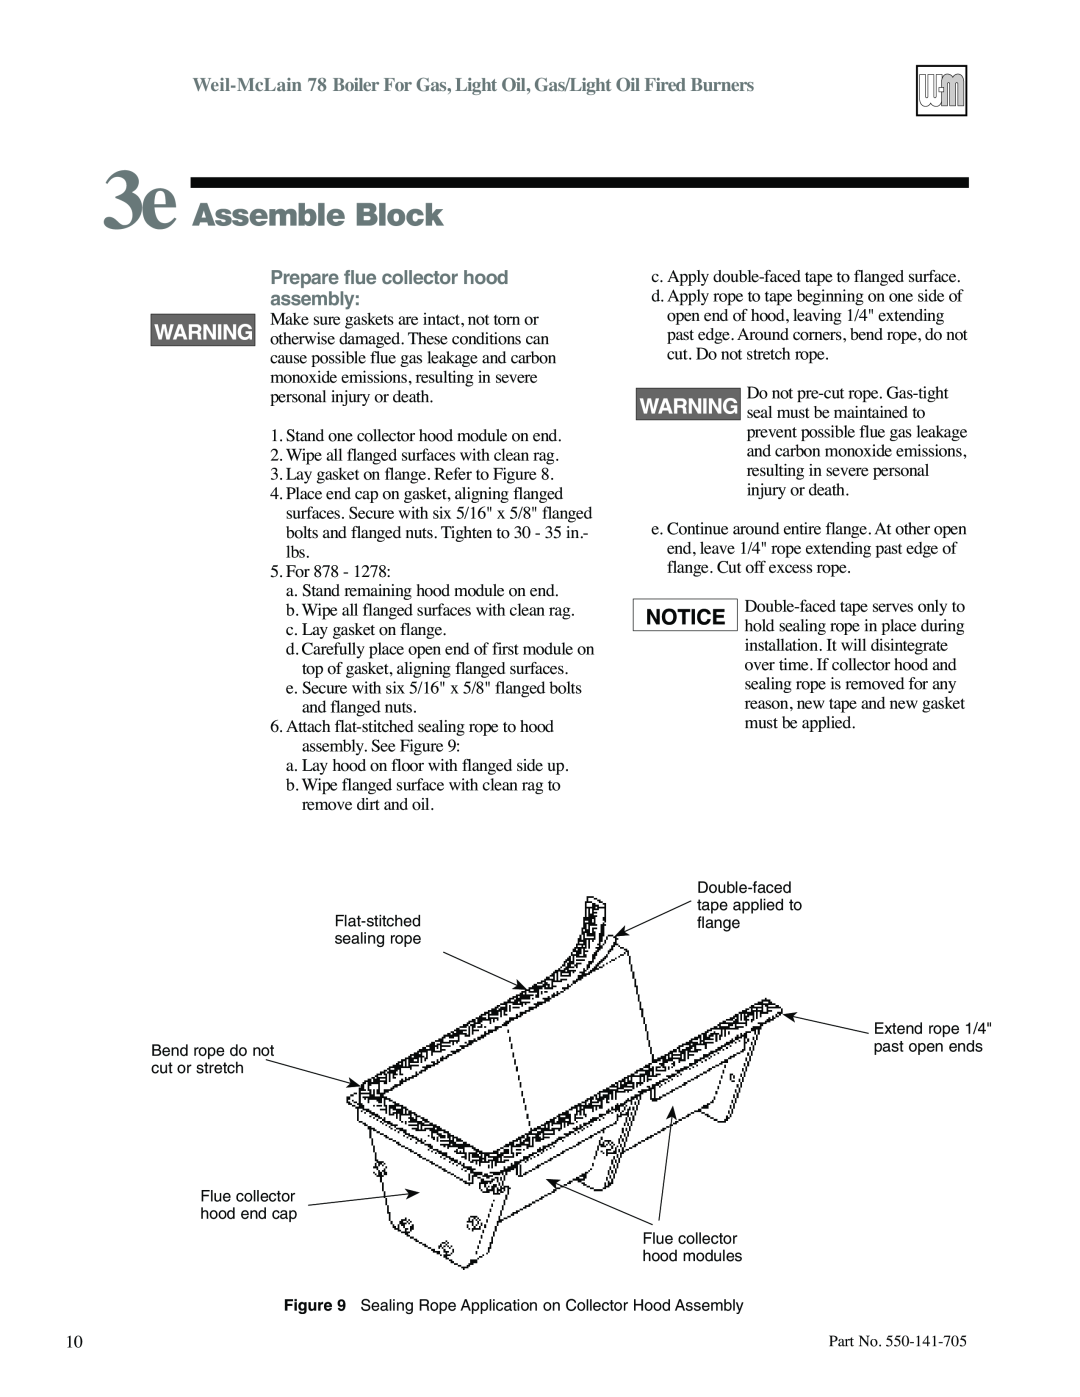 Weil-McLain 78 manual 3e Assemble Block, Prepare flue collector hood assembly 